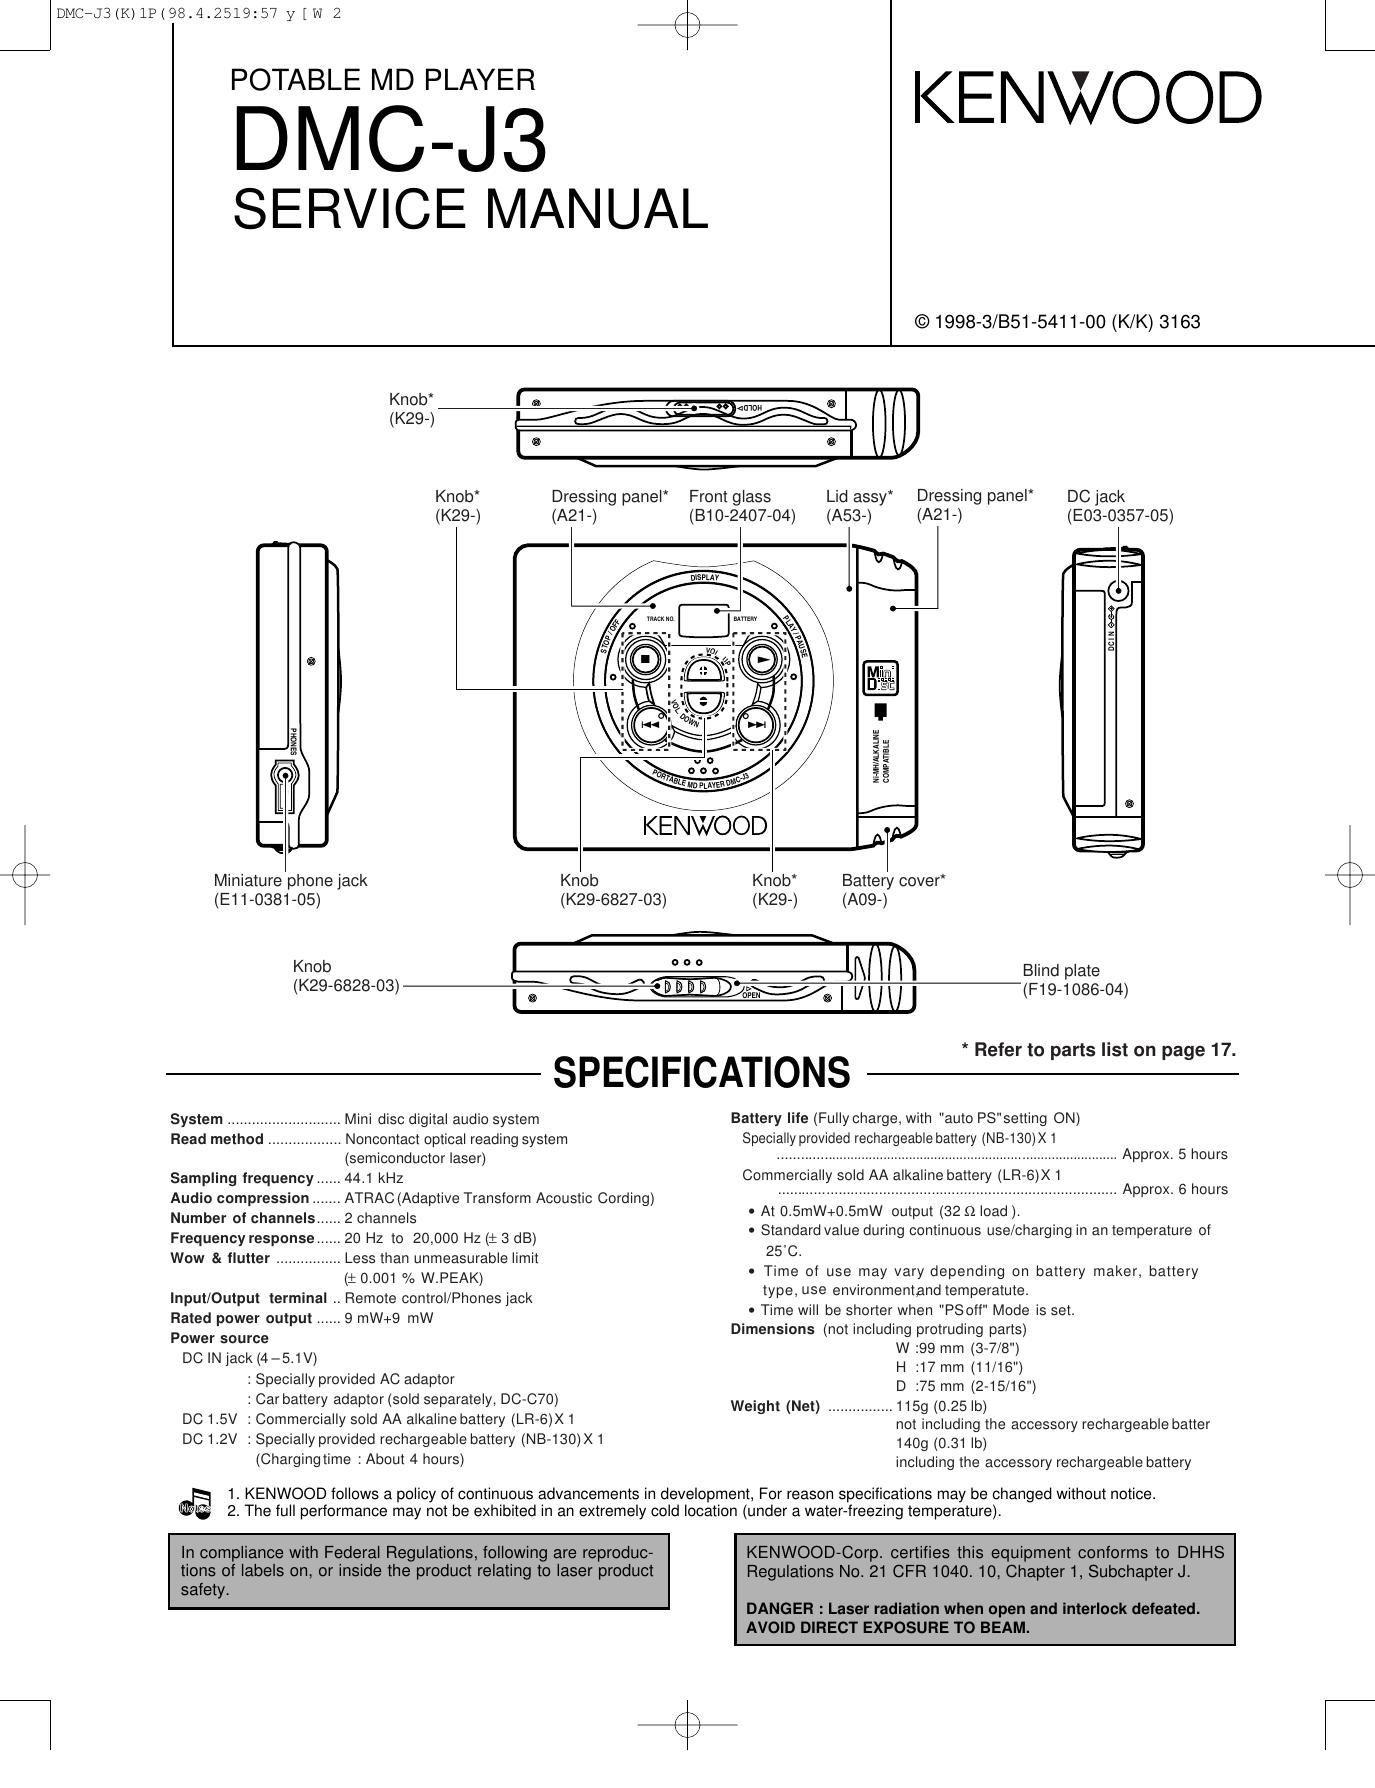 Kenwood DMCJ 3 Service Manual